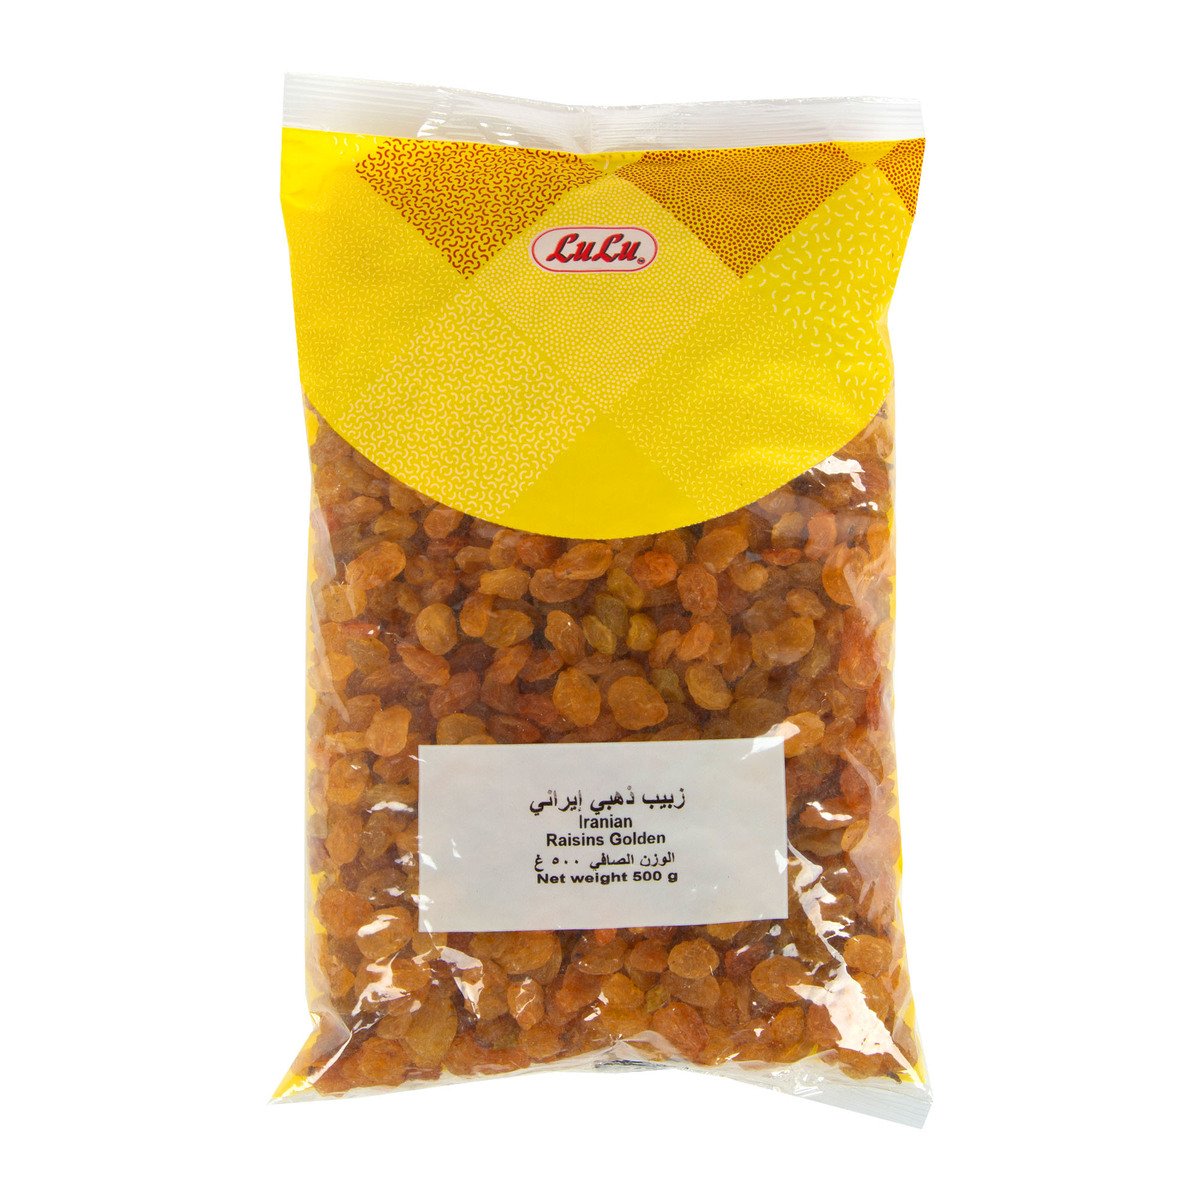 LuLu Iranian Raisins Golden 500 g